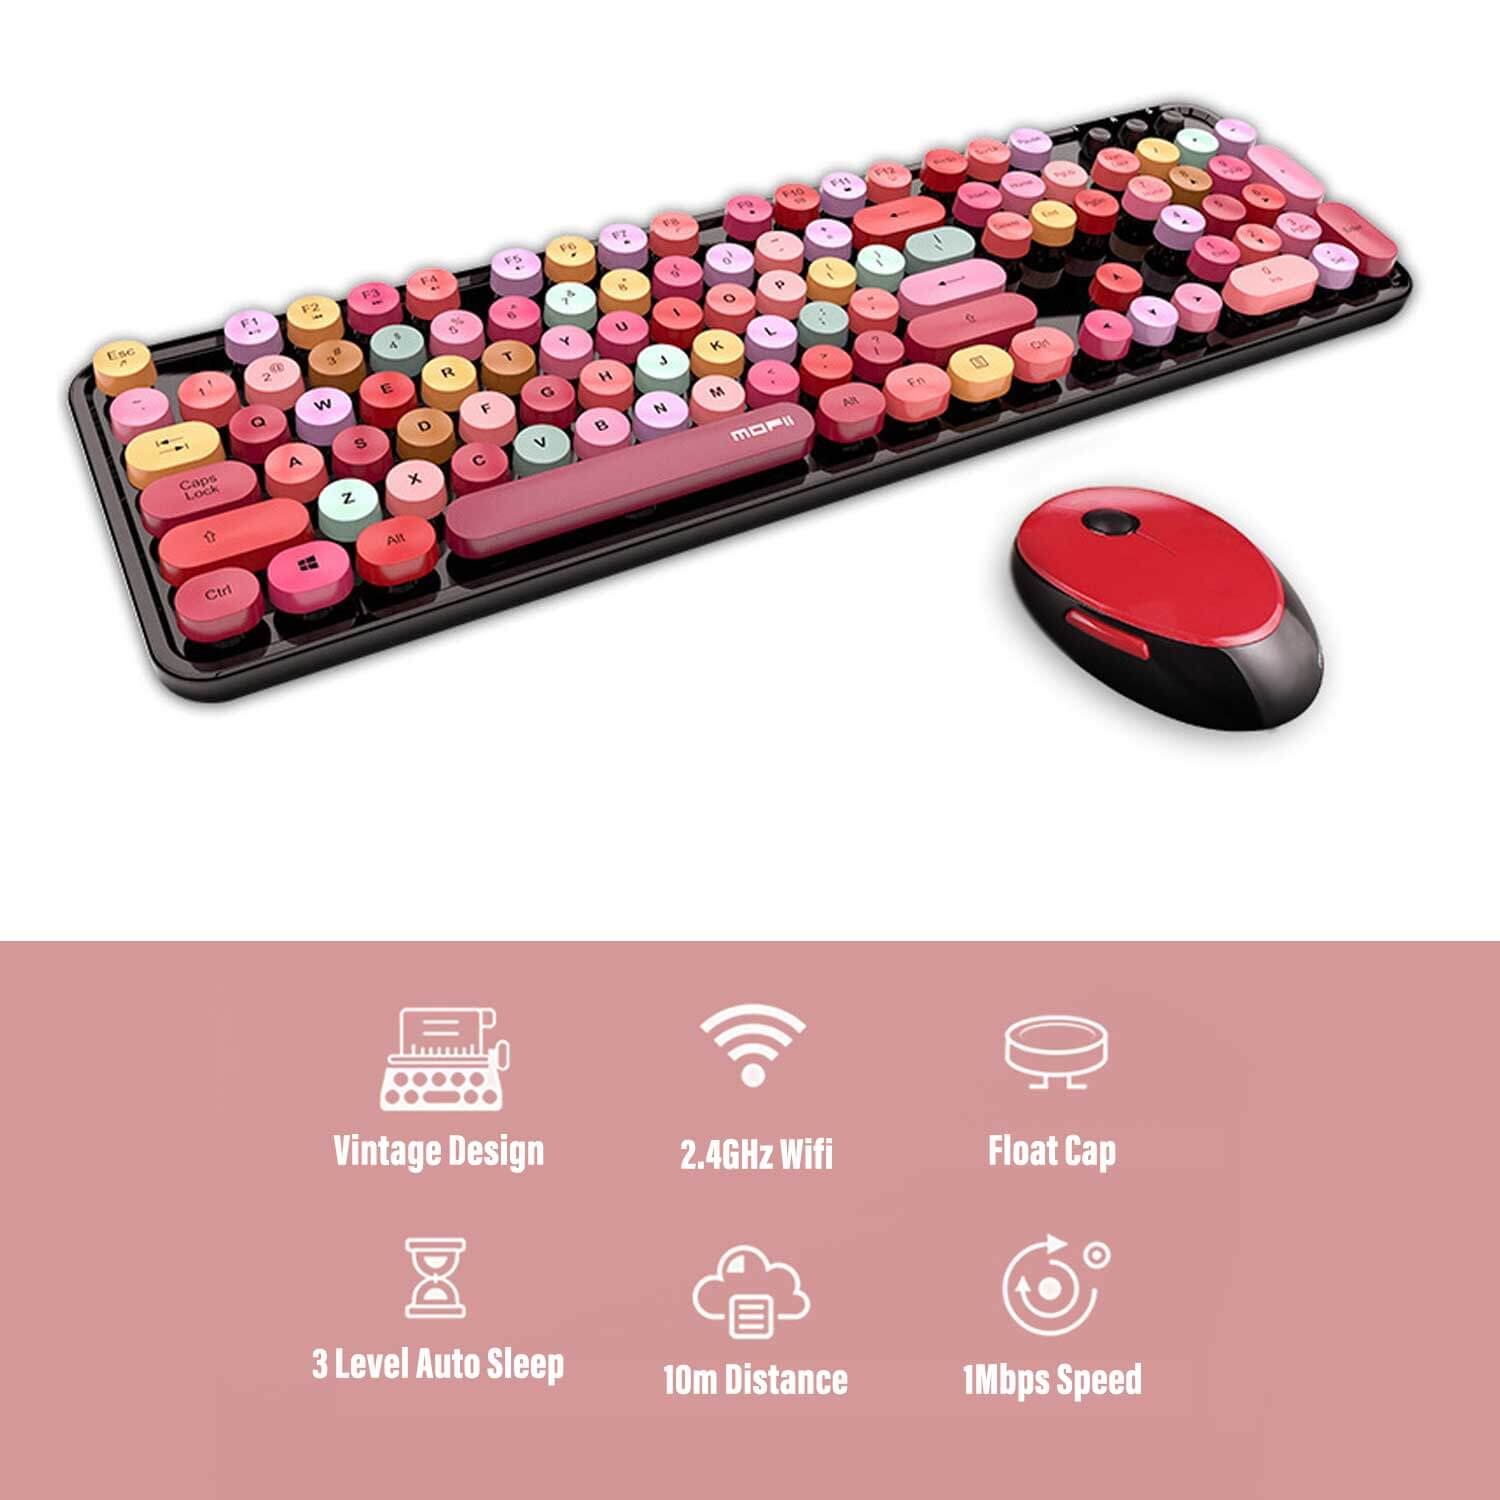 Mofii Wireless Keyboard and Mouse Combo